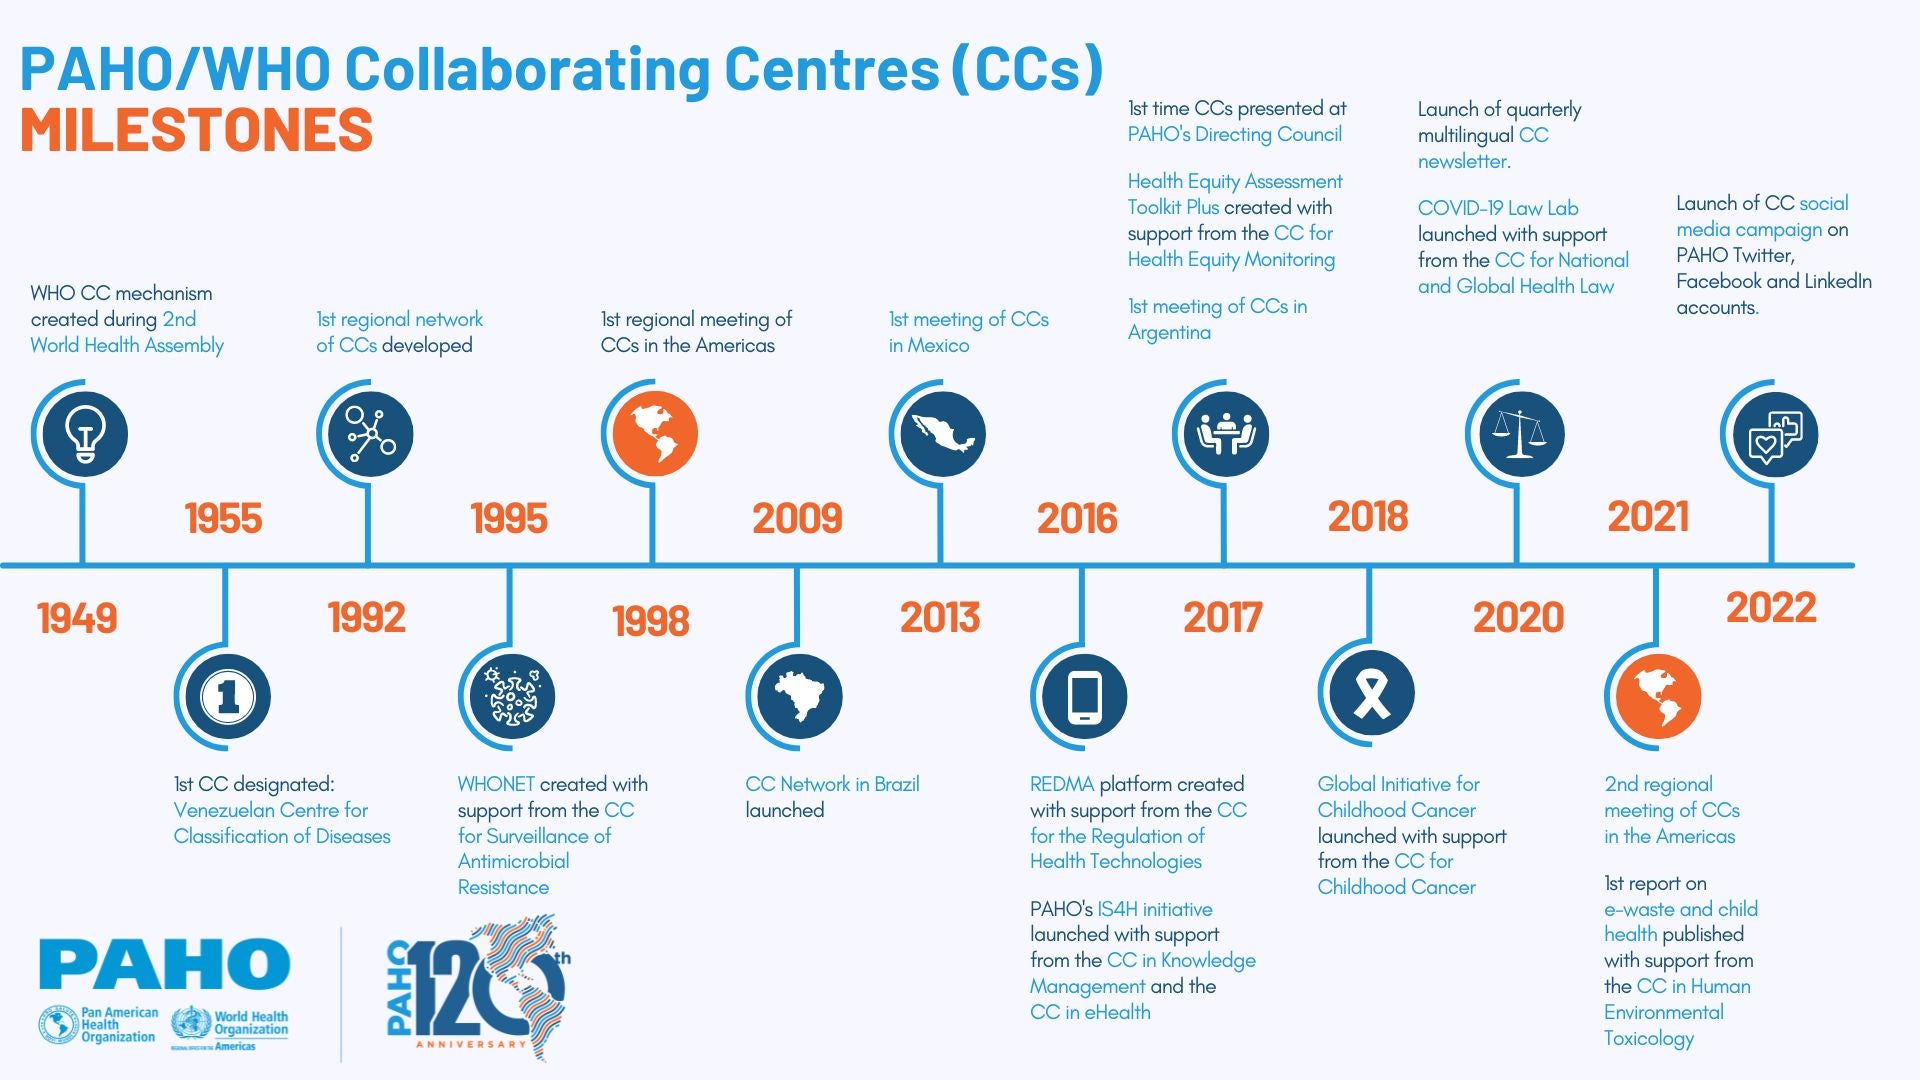 PAHO/WHO Collaborating Centres Milestones